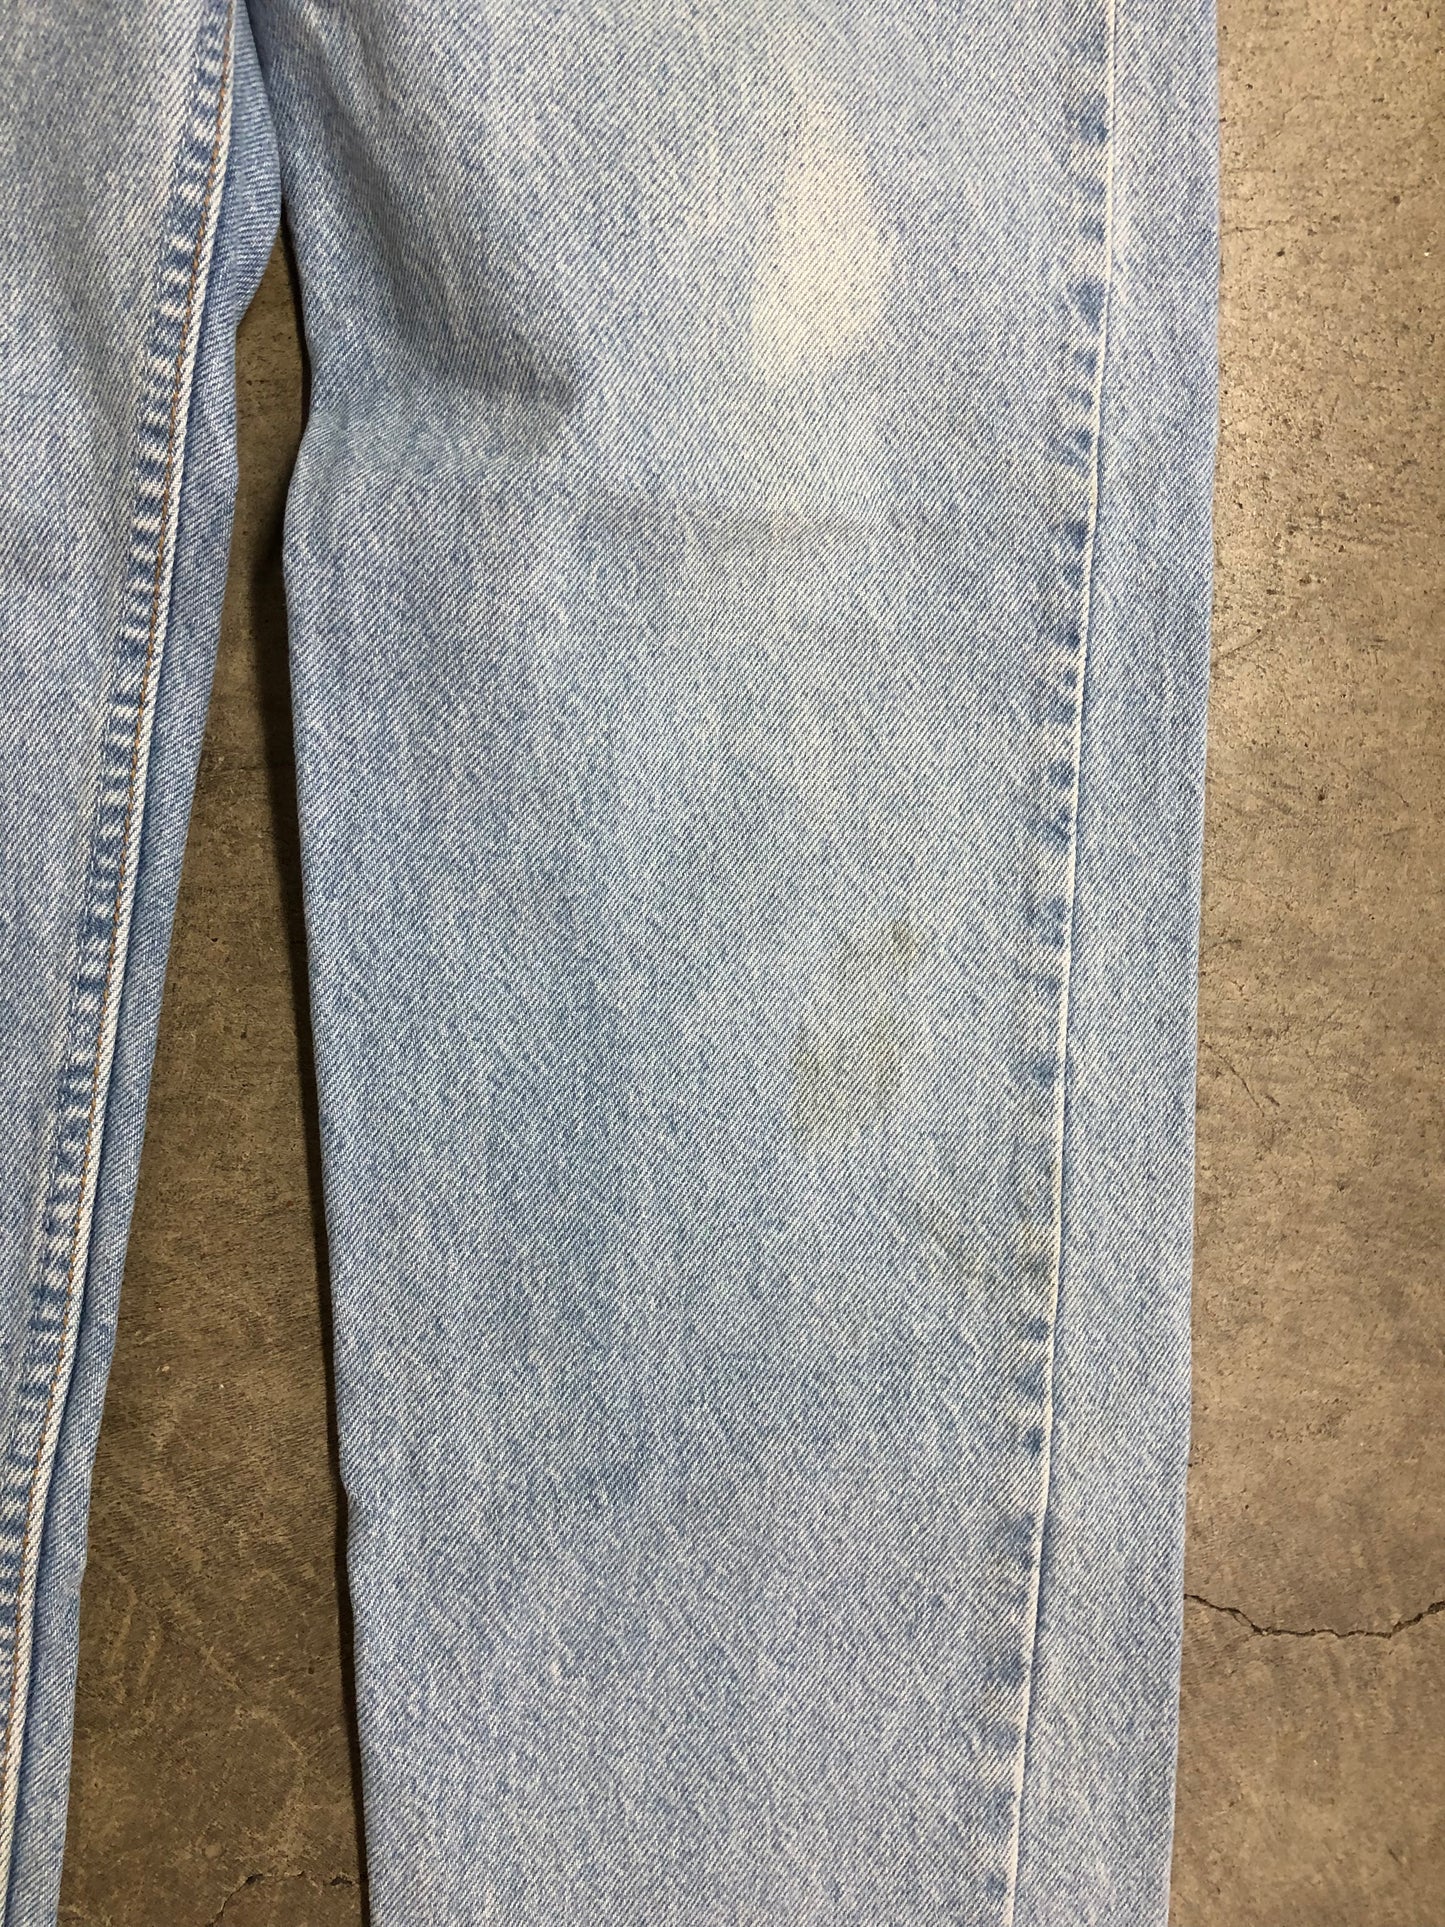 VTG 555 Levi's Red Tab Blue Jeans Sz 34x29